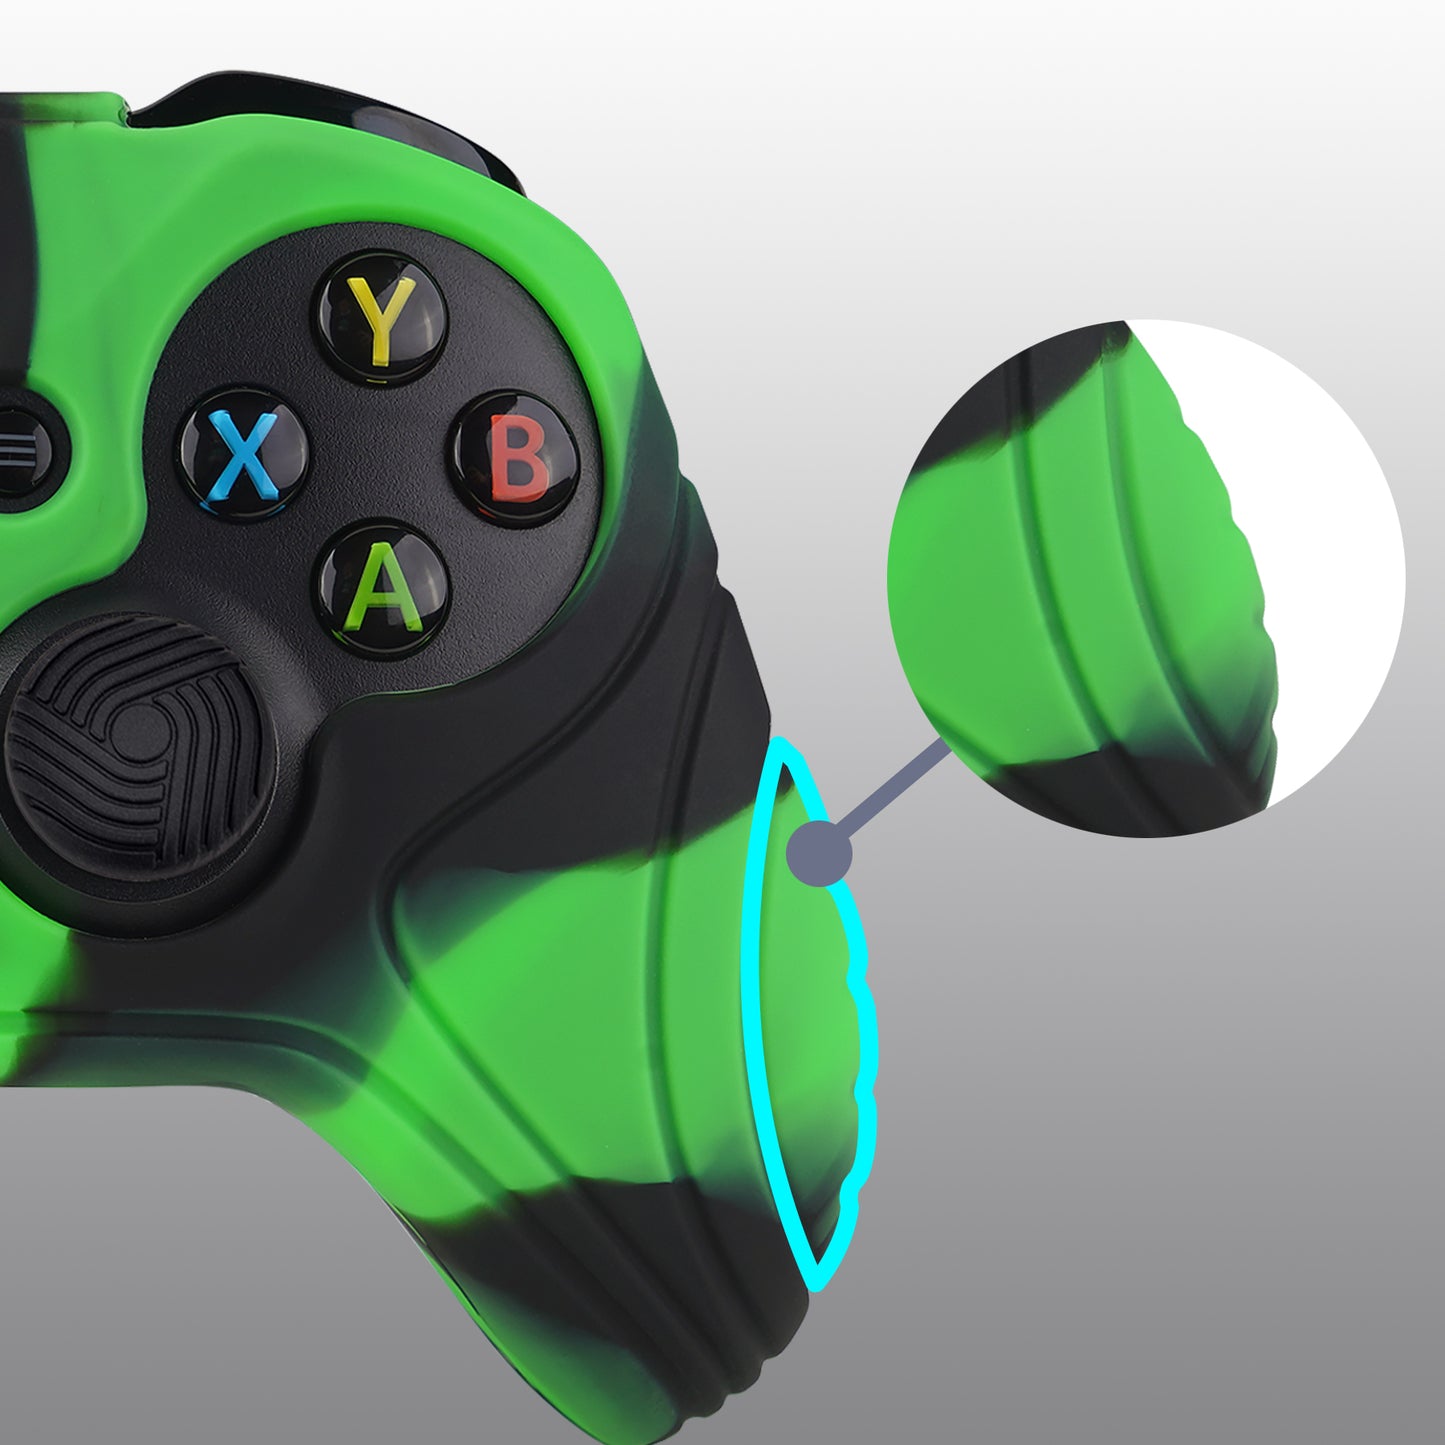 PlayVital Samurai Edition Green & Black Anti-Slip Controller Grip Silicone Skin for Xbox One X/S Controller, Ergonomic Soft Rubber Protective Case Cover for Xbox One S/X Controller with Black Thumb Stick Caps - XOQ044 playvital